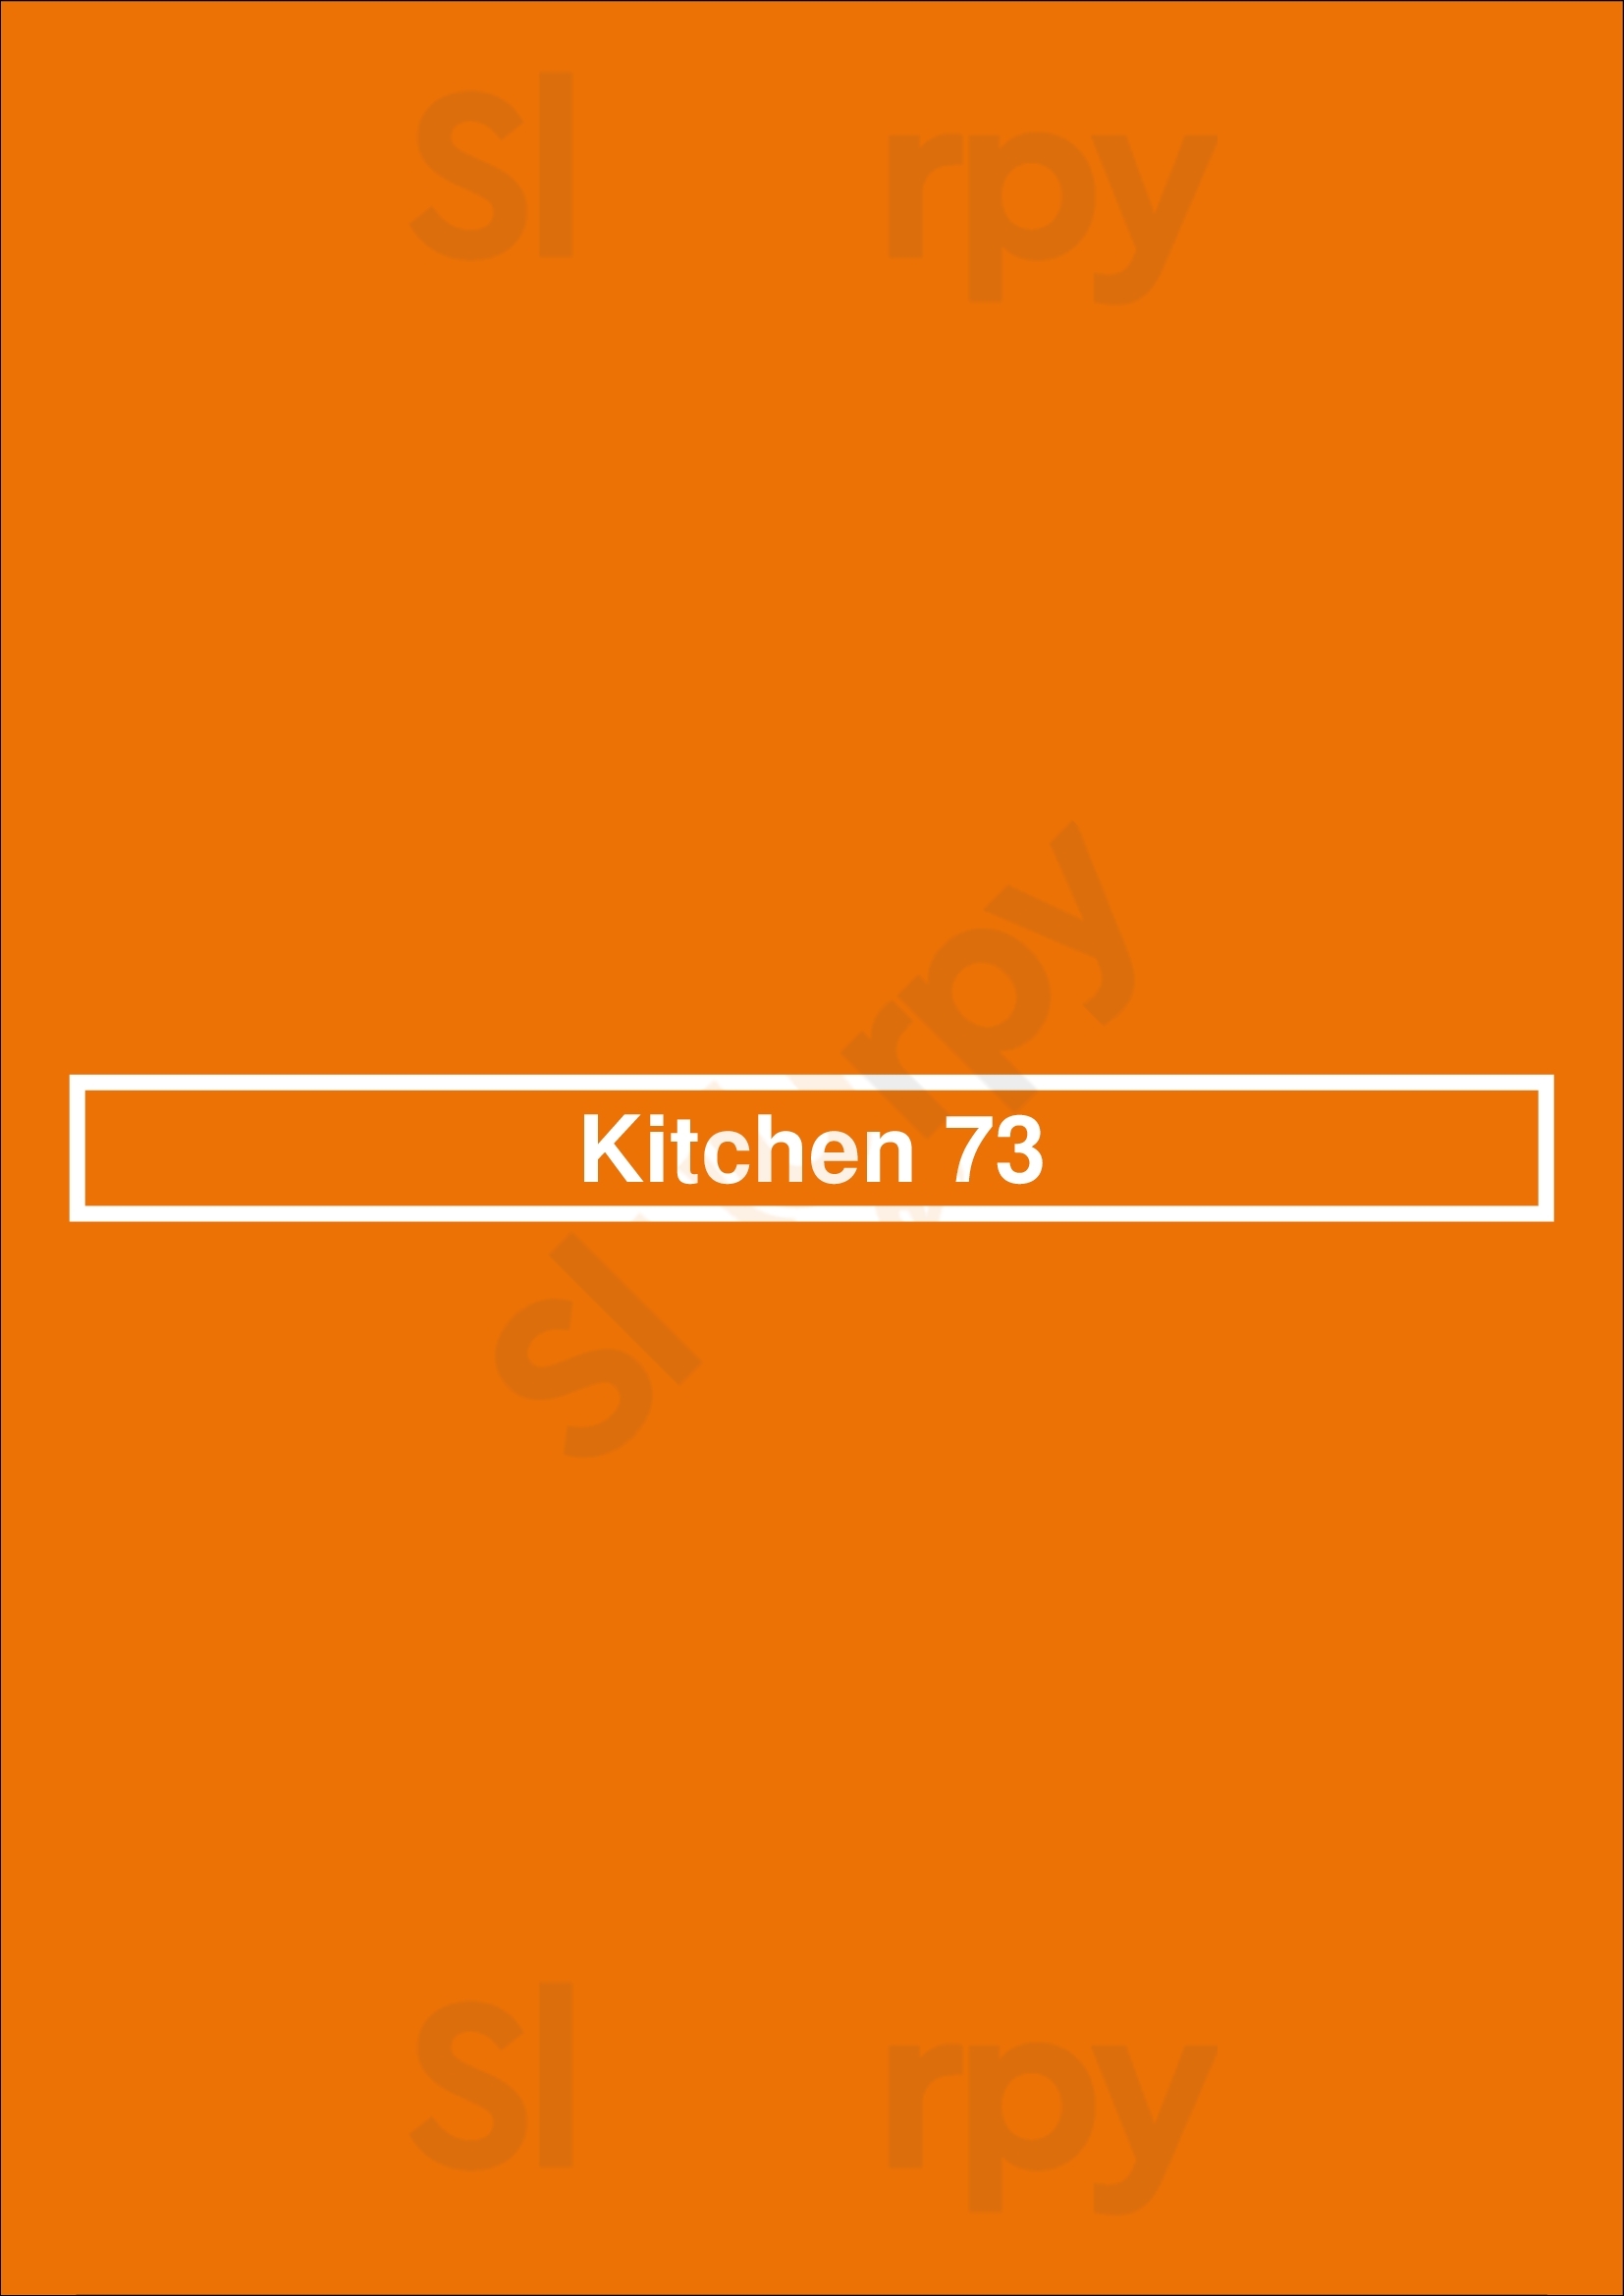 Kitchen 73 Dollard-des-Ormeaux Menu - 1